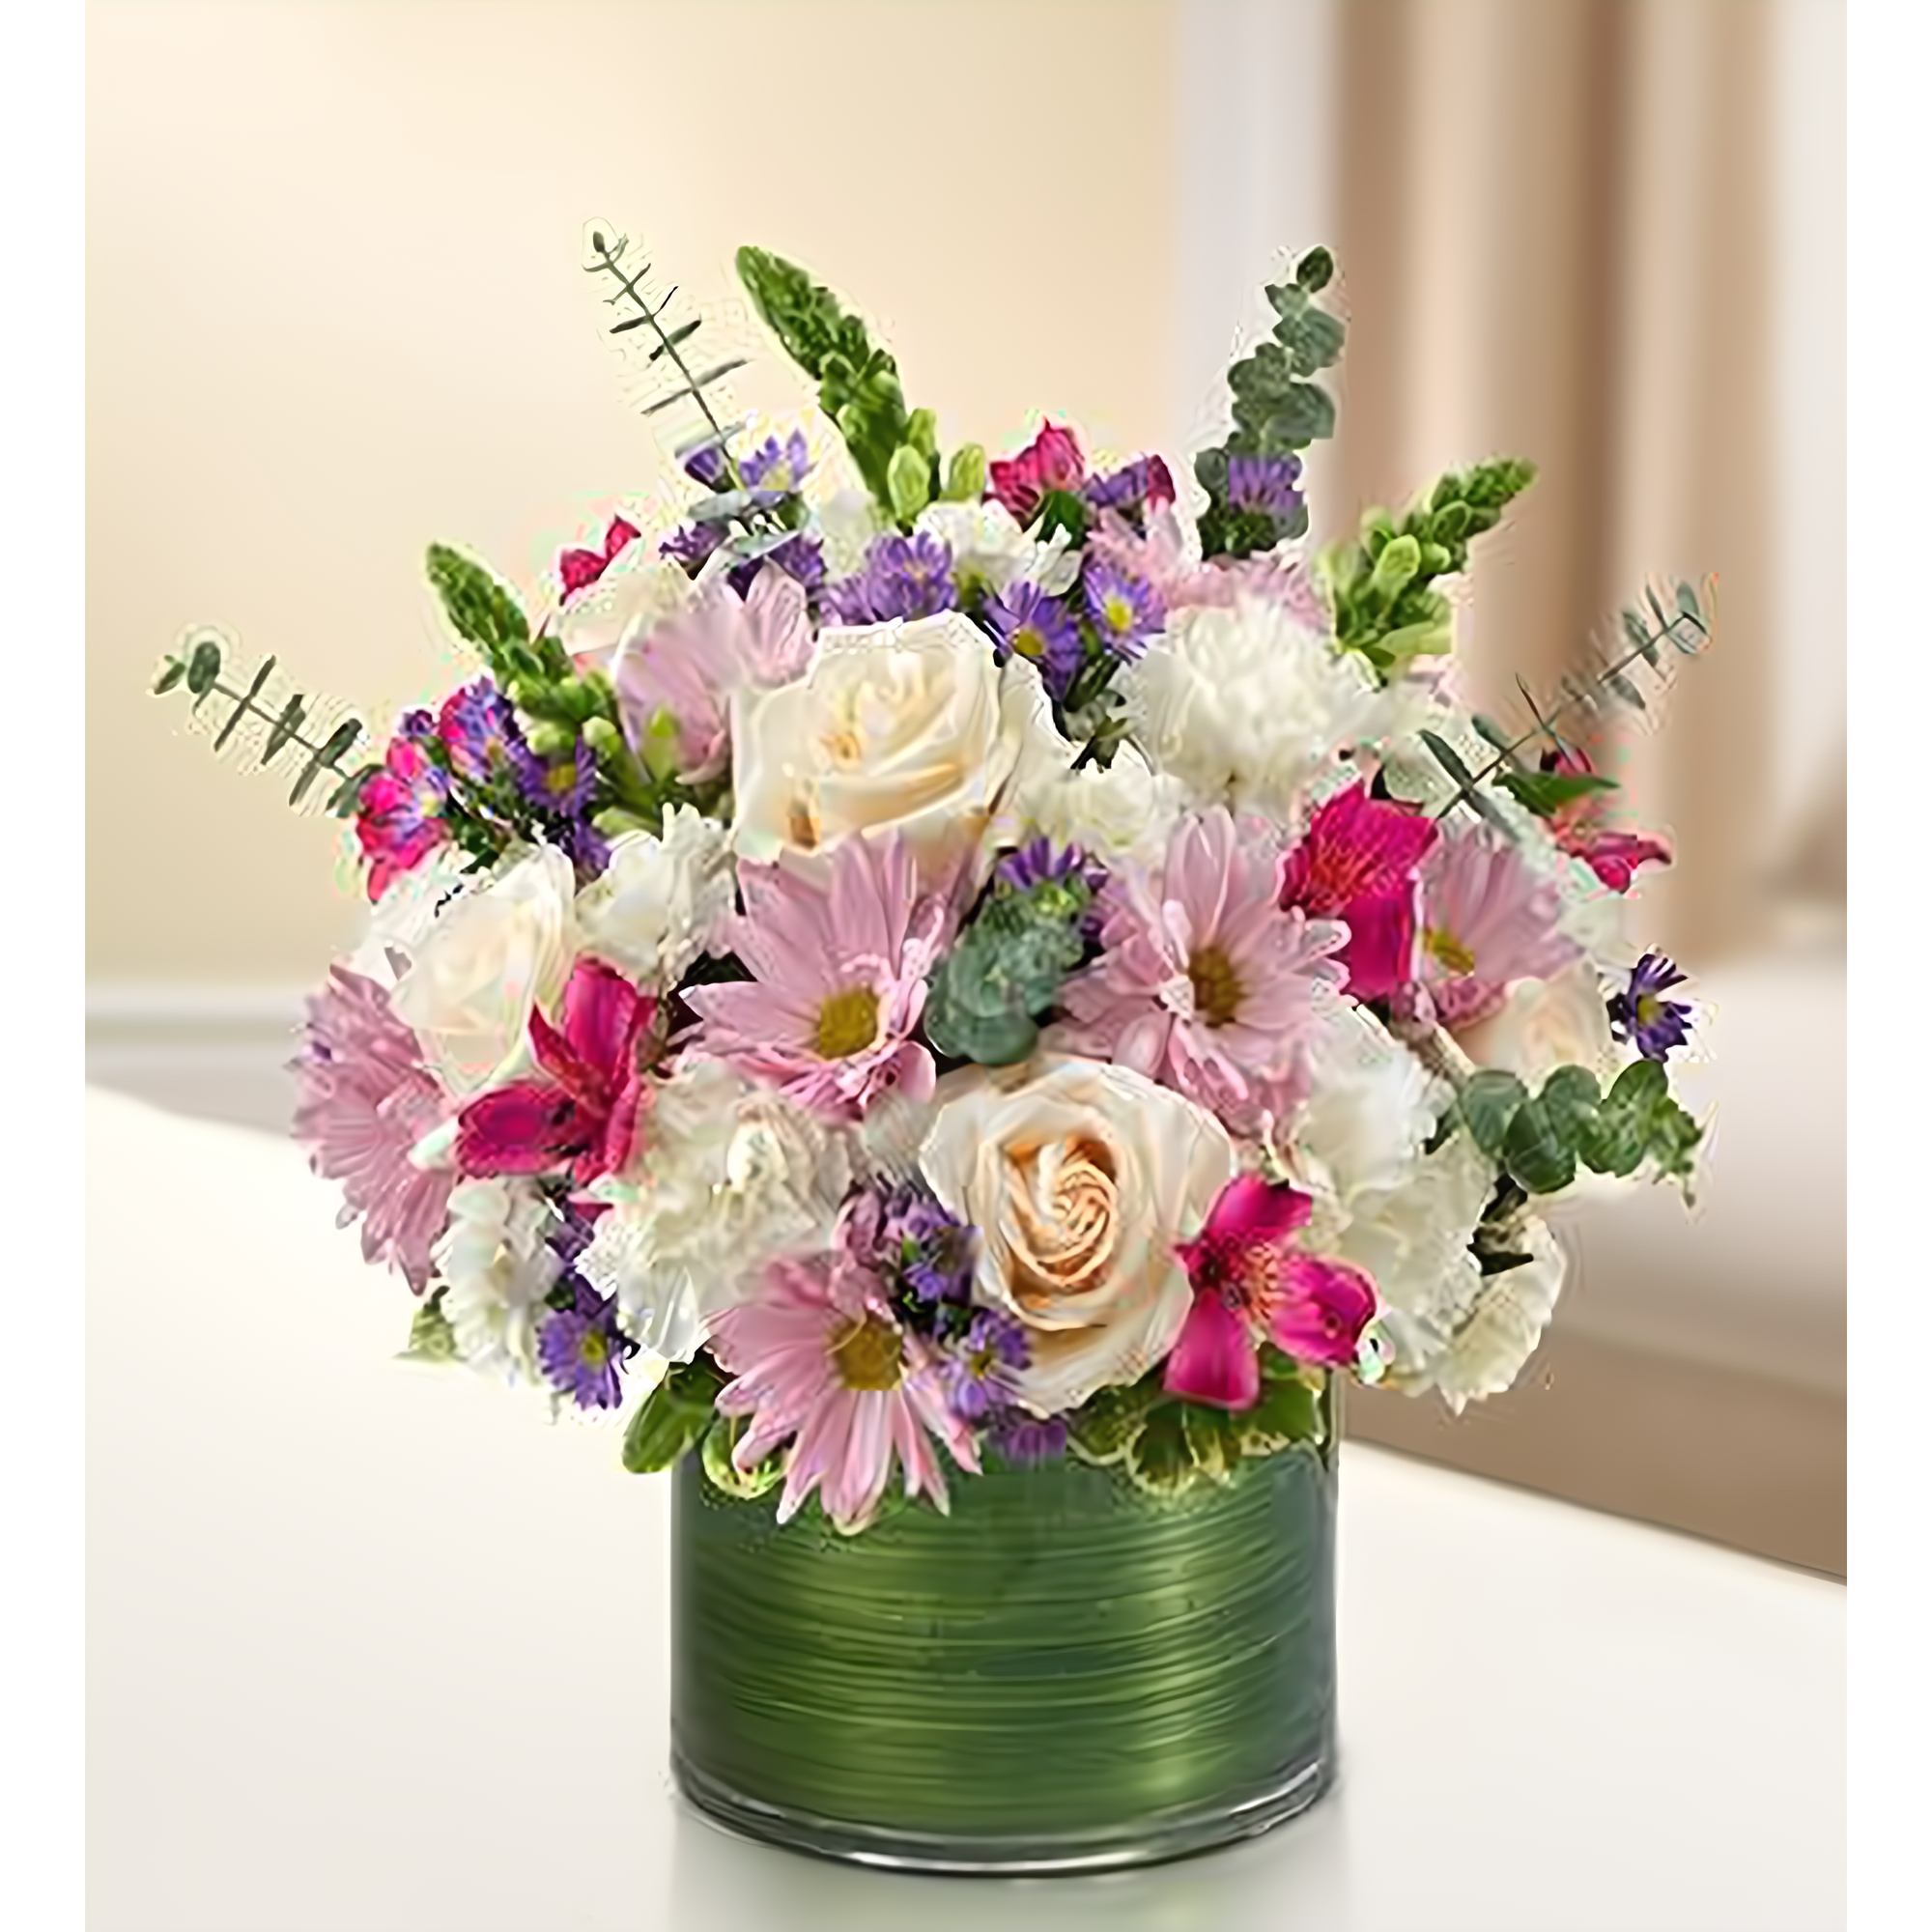 Cherished Memories - Lavender and White - Funeral > Vase Arrangements